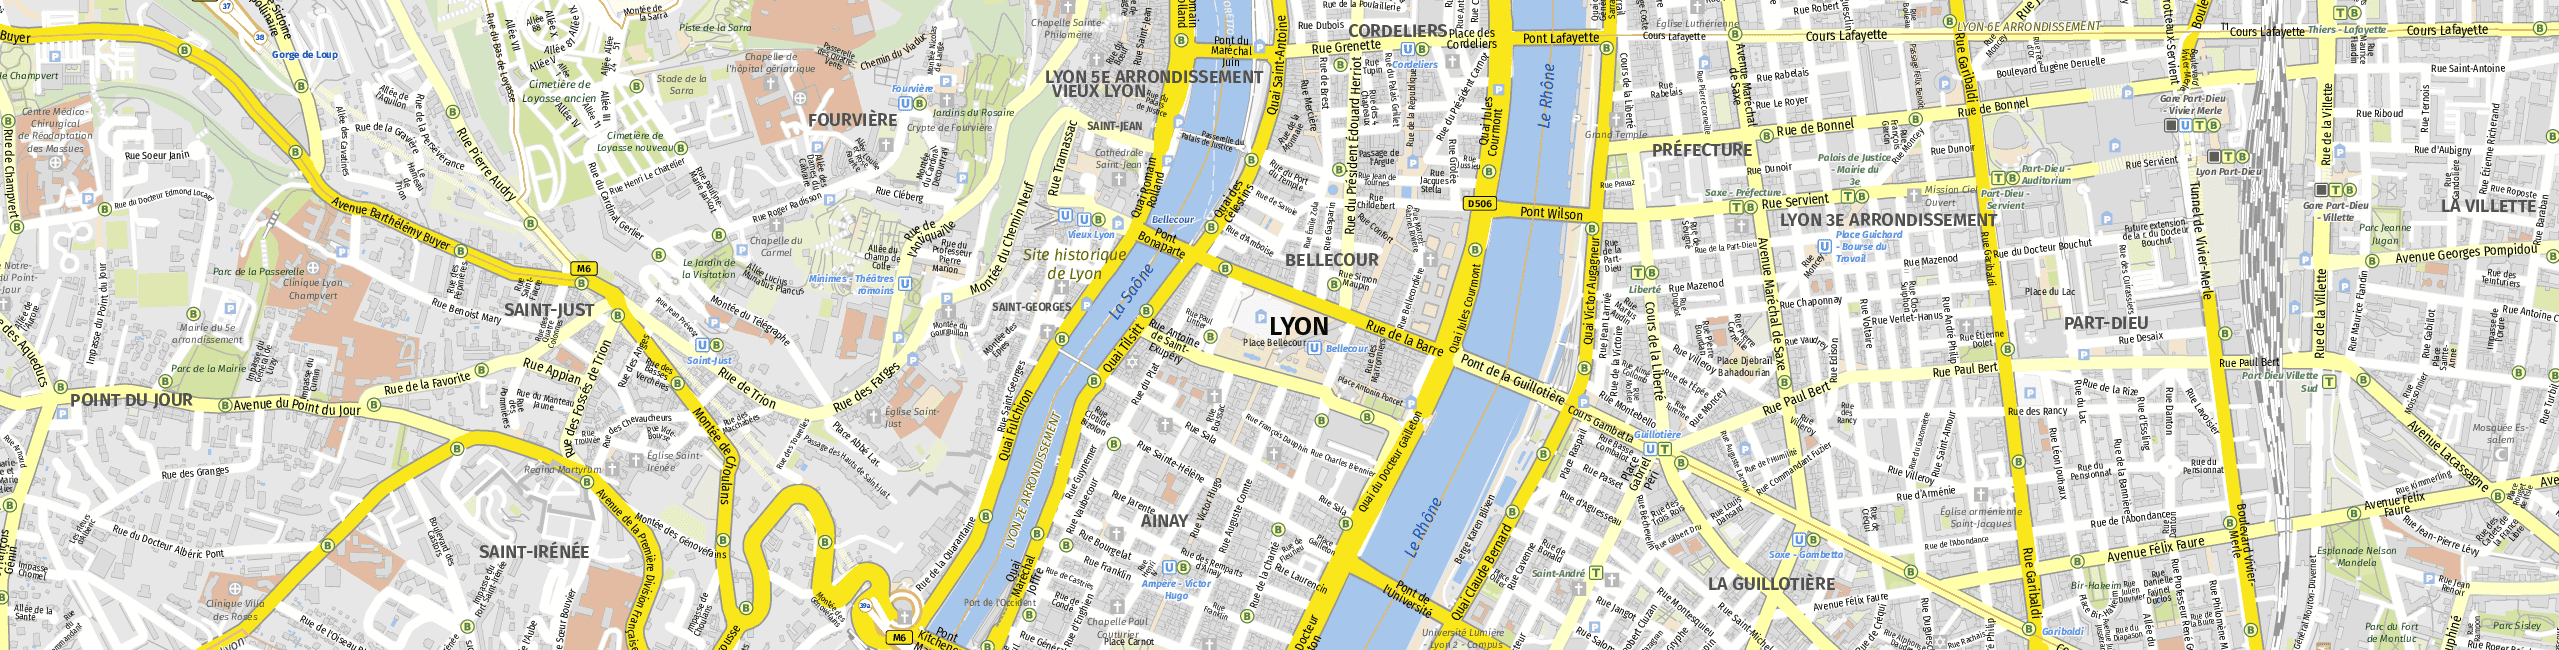 Stadtplan Lyon zum Downloaden.